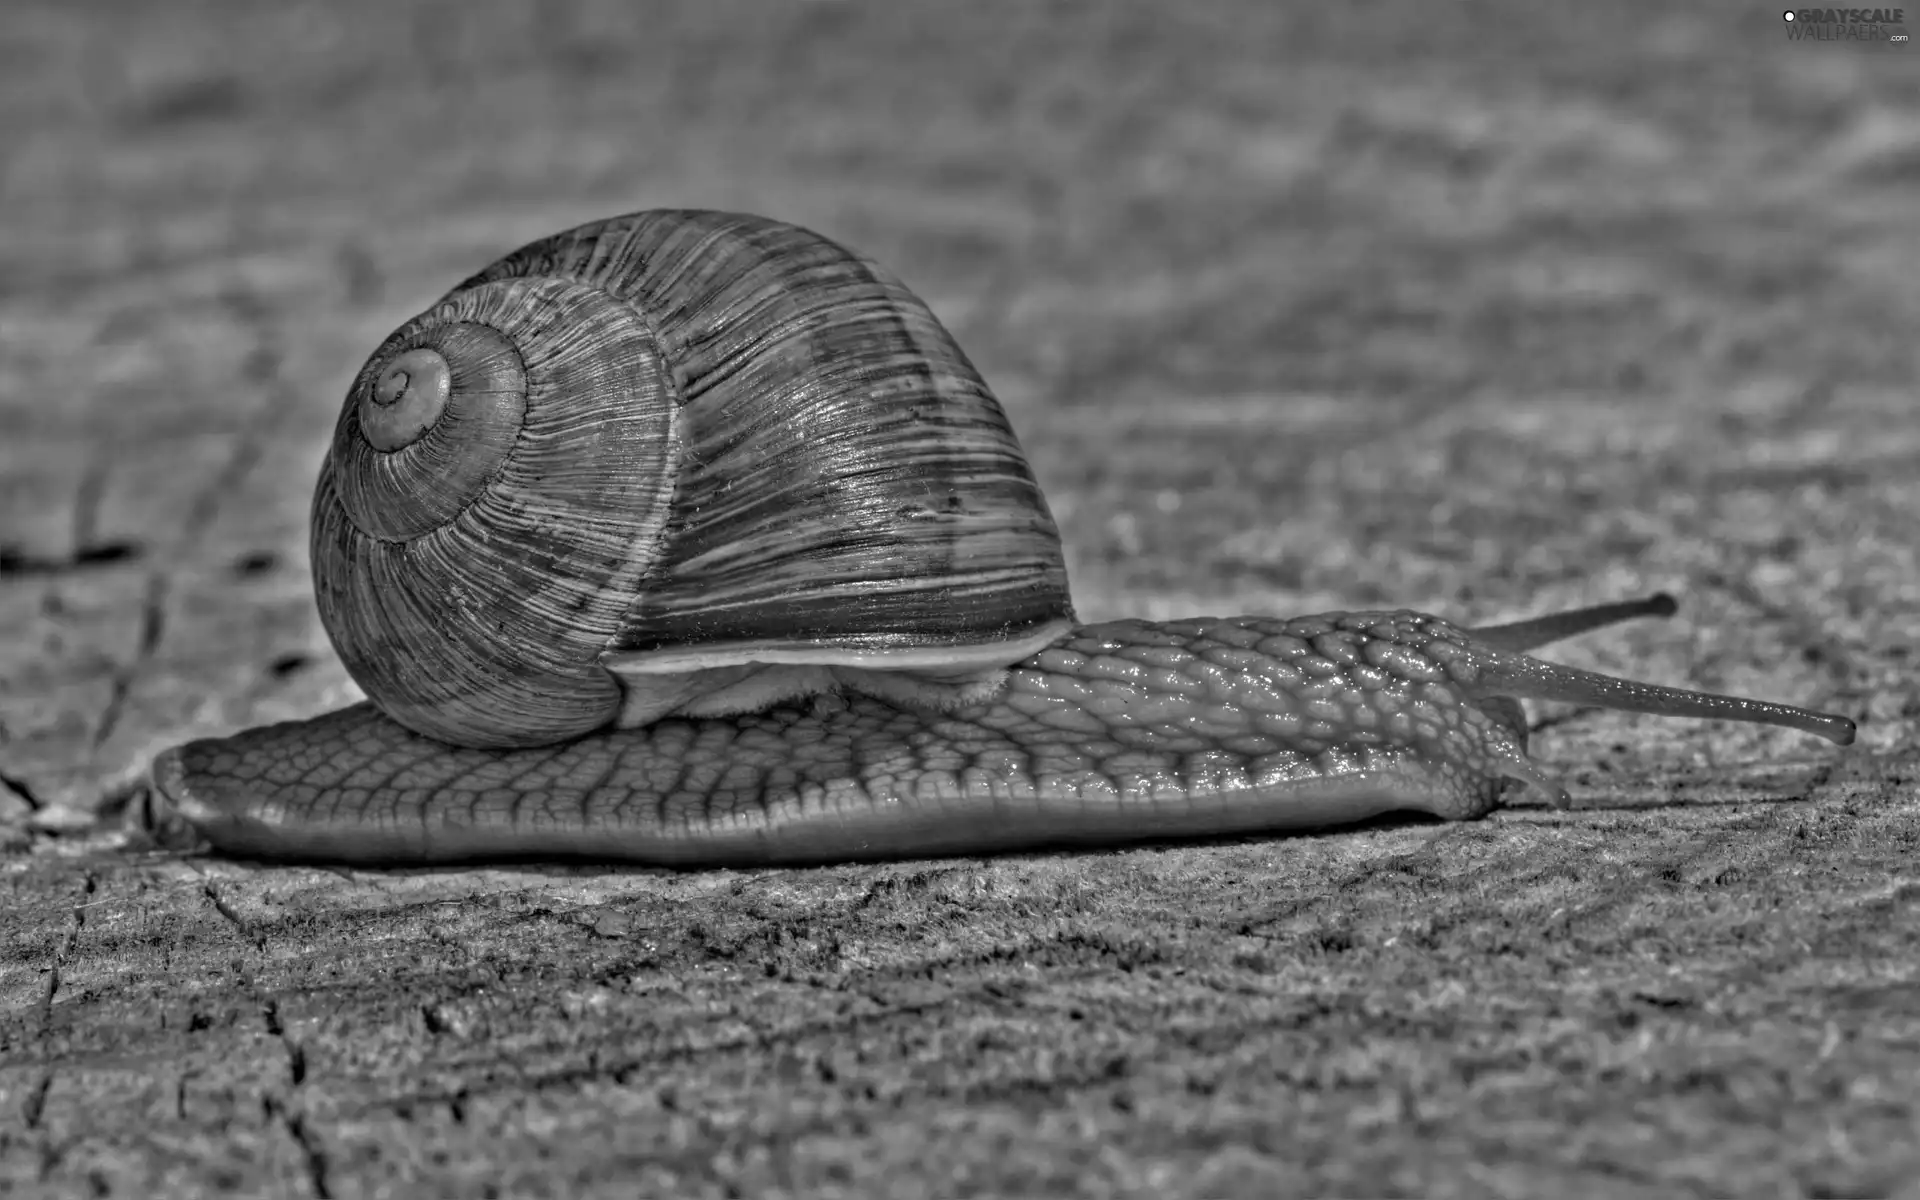 crazy, snail, shell